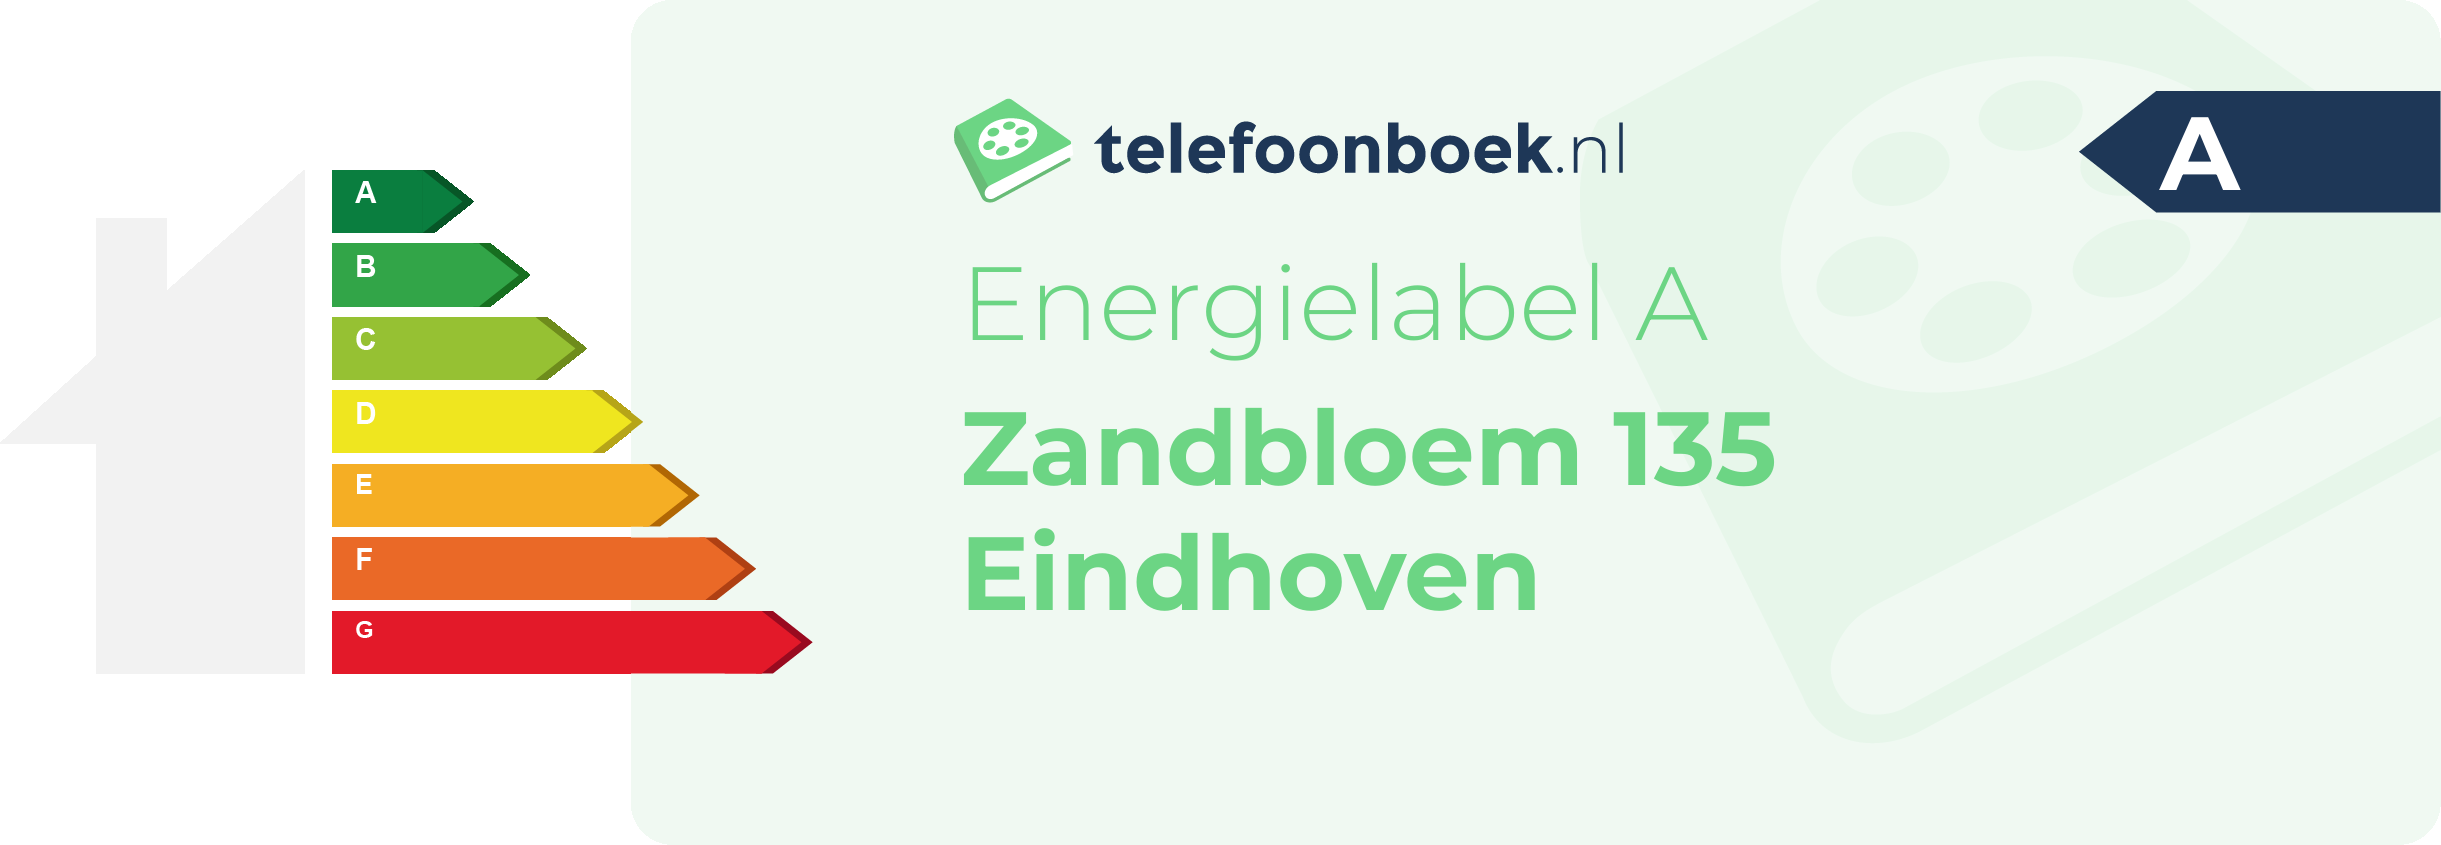 Energielabel Zandbloem 135 Eindhoven